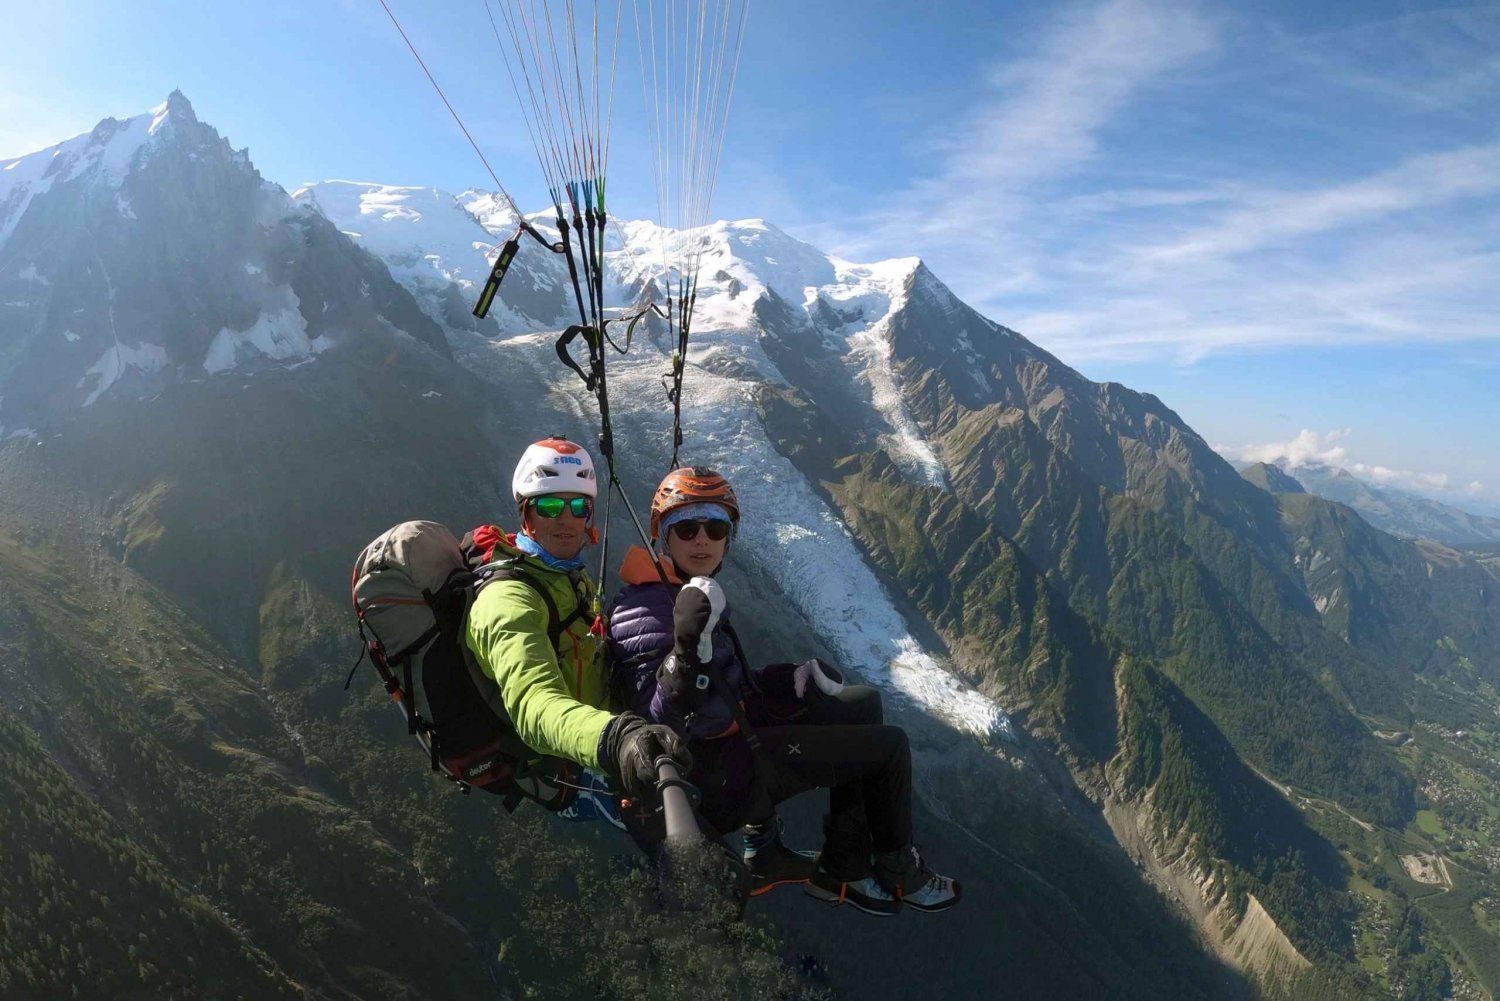 Chamonix-Mont-Blanc: Volo in parapendio tandem in montagna